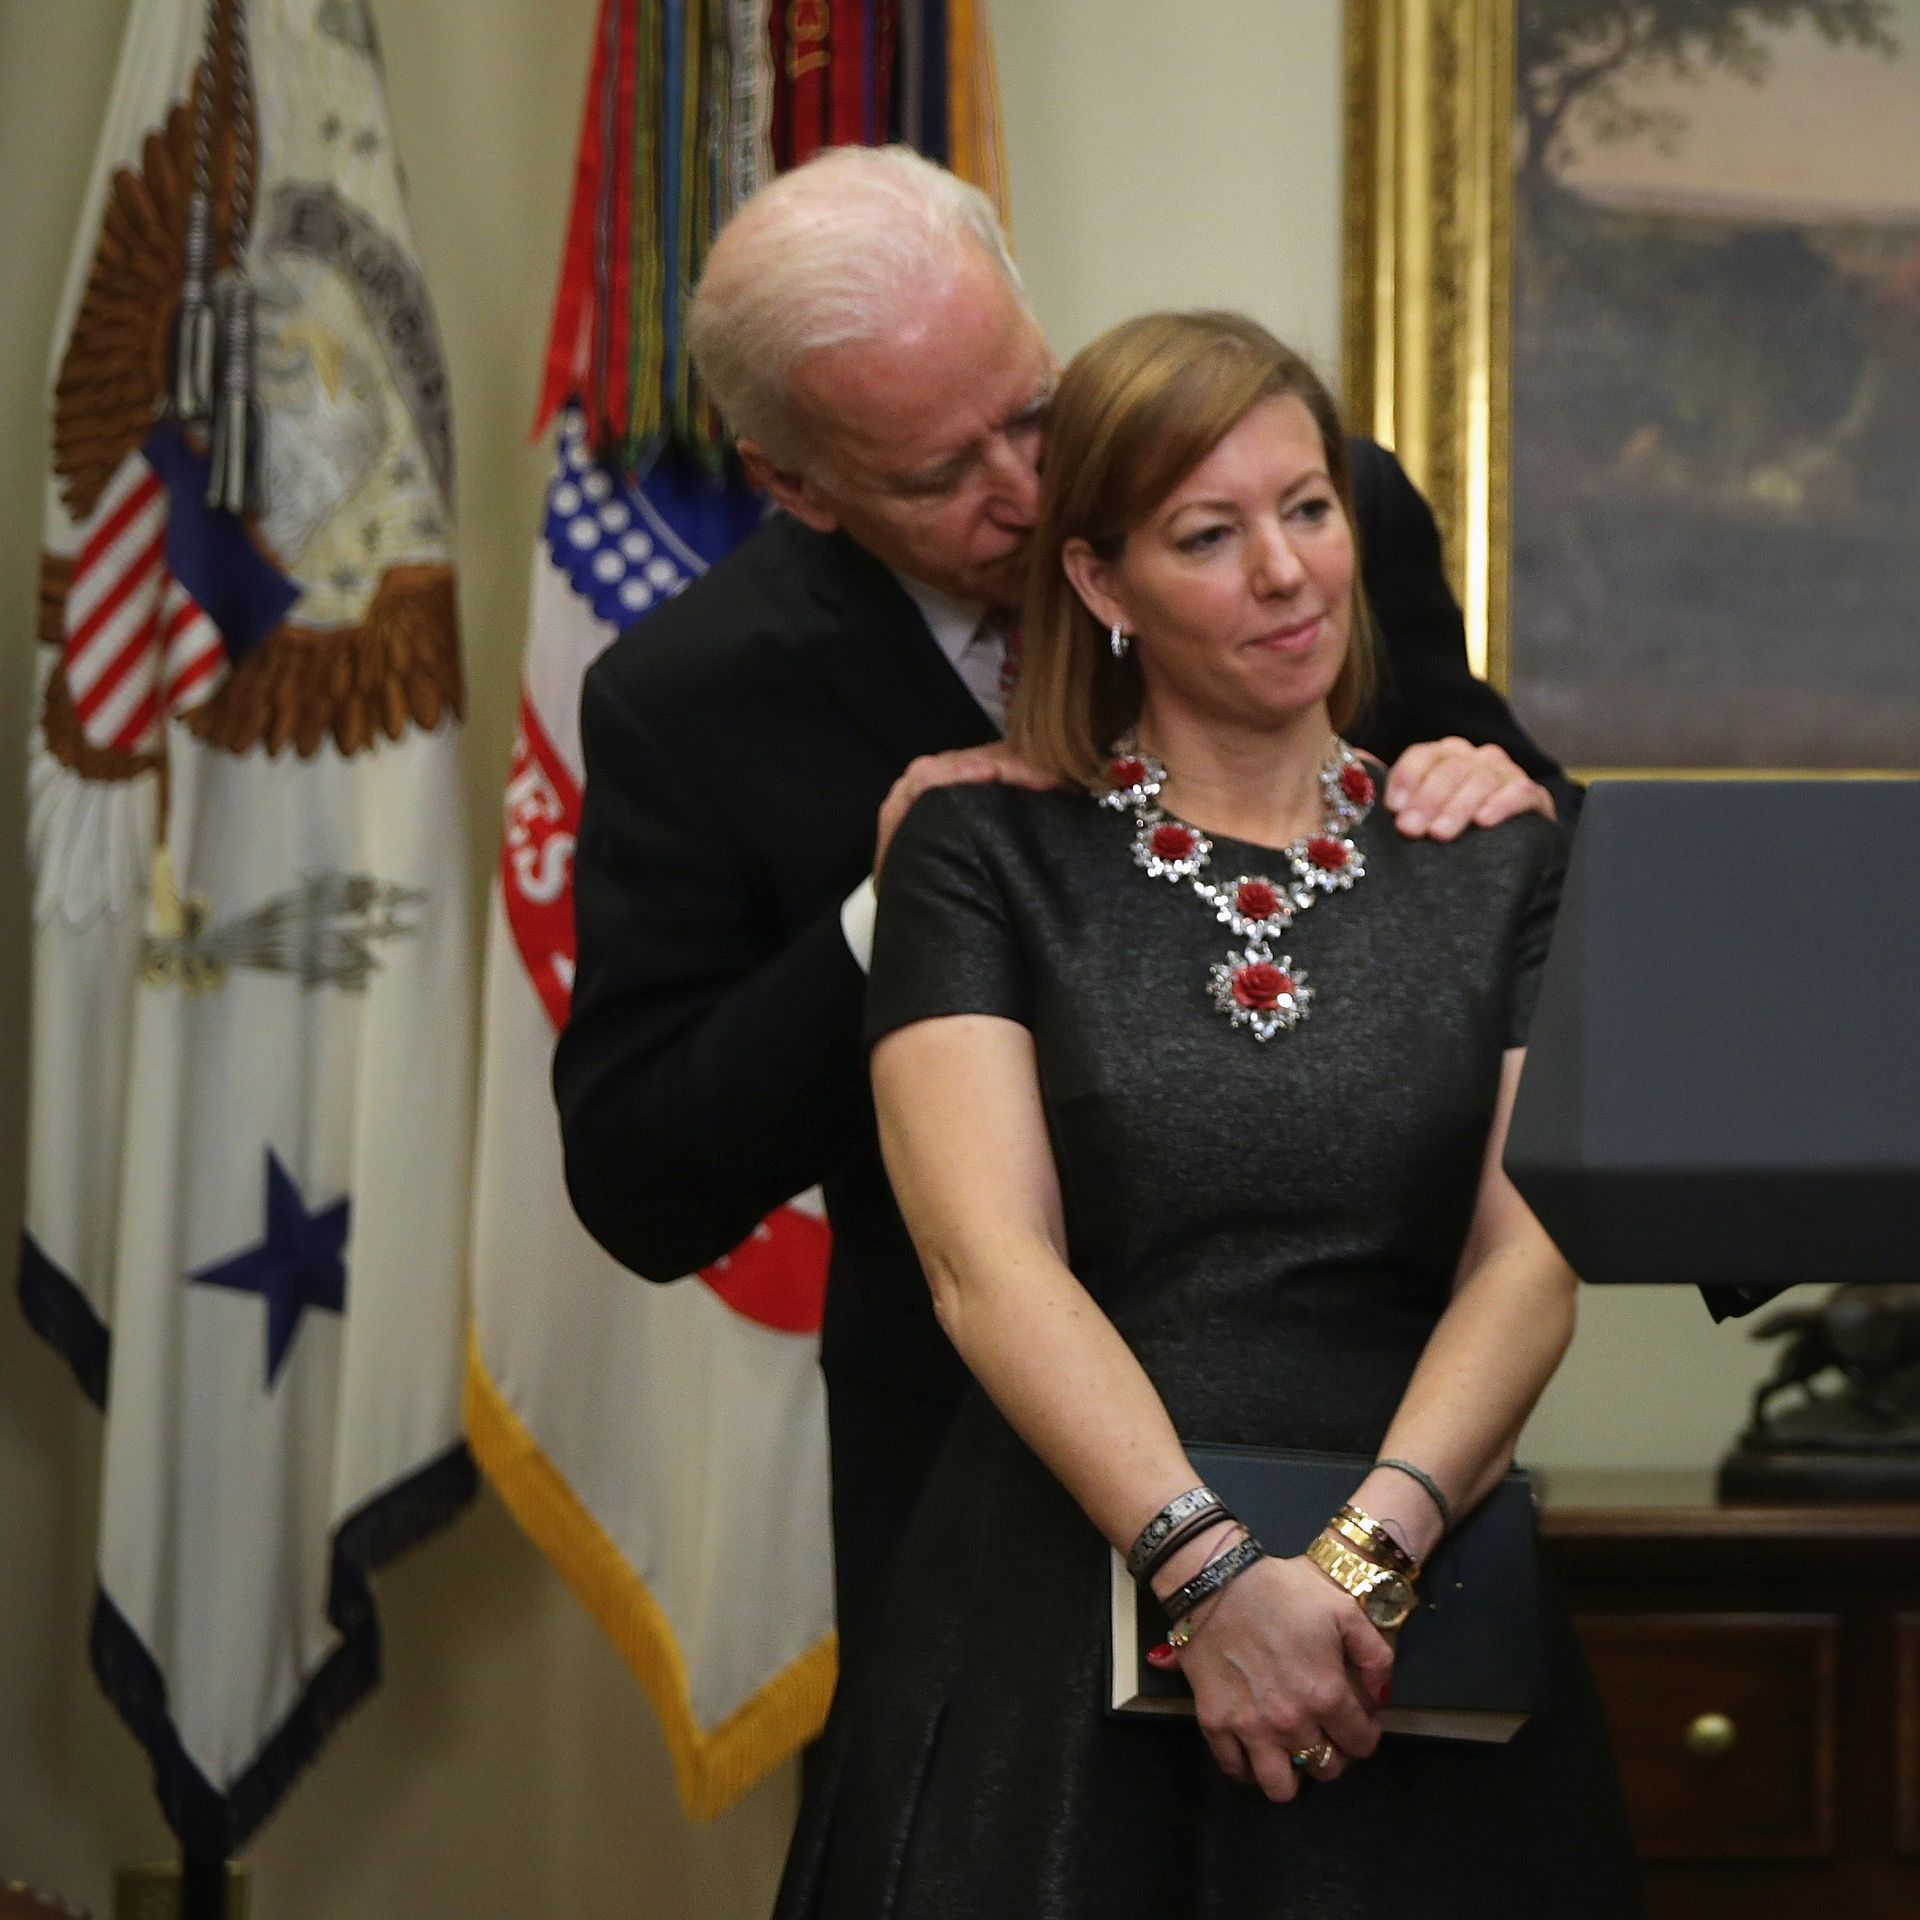 Terminologi Effektivitet lys pære Stephanie Carter: Image of Biden's embrace "misleadingly extracted"